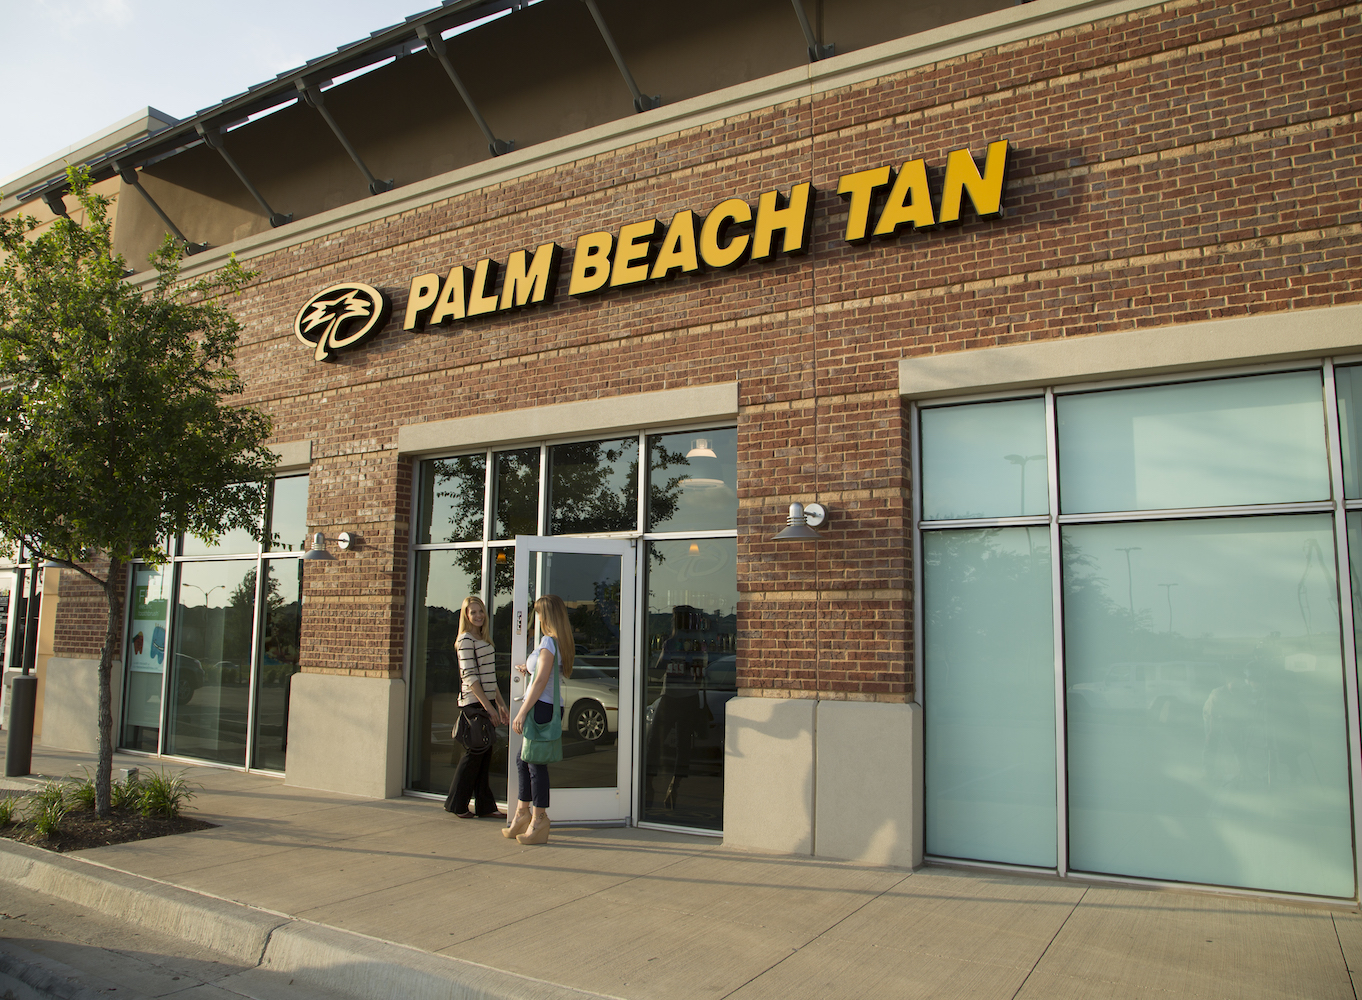 Palm Beach Tan 174 Expands with Tan Pro Acquisition Smart Tan Smart Tan